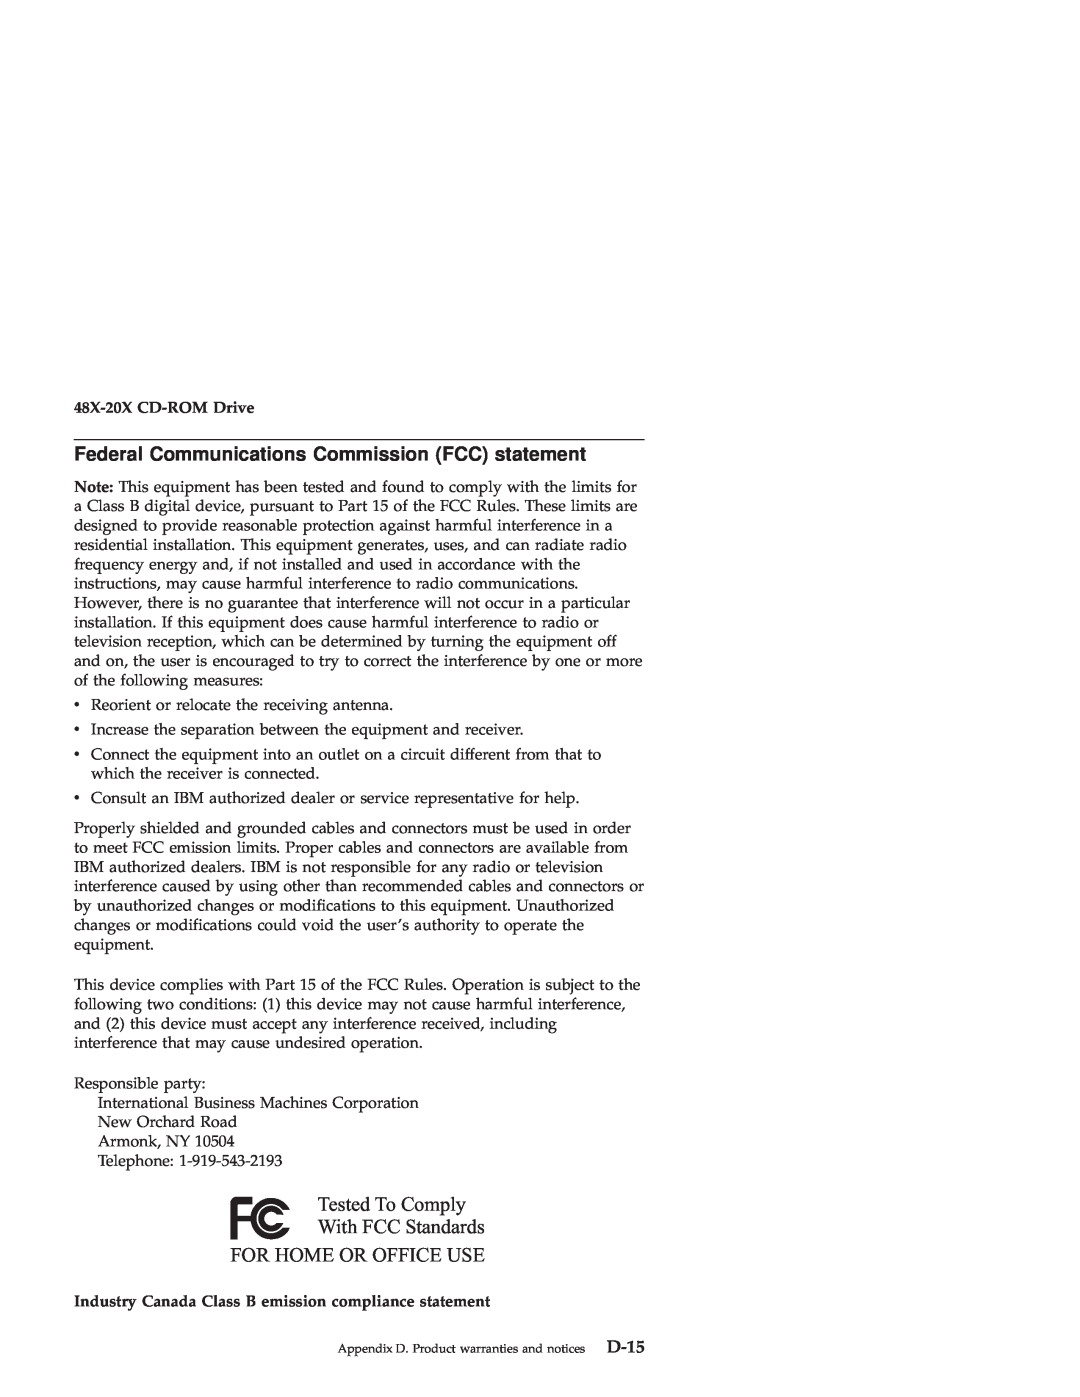 IBM manual Federal Communications Commission FCC statement, D-15, 48X-20X CD-ROM Drive 